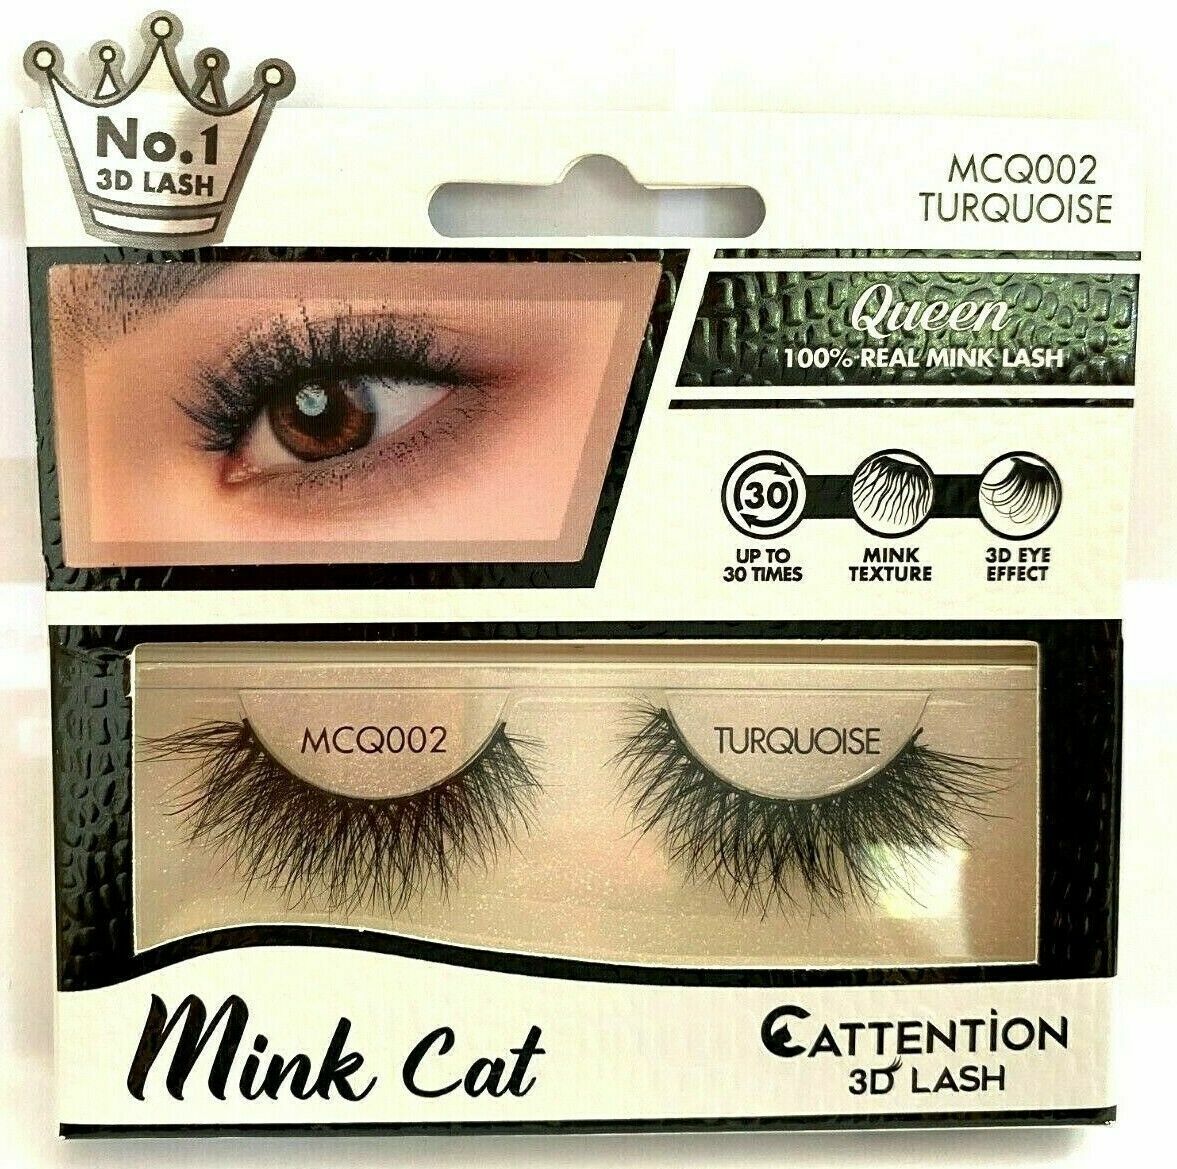 Mink Cat Queen - 100% Real Mink 3D Lashes